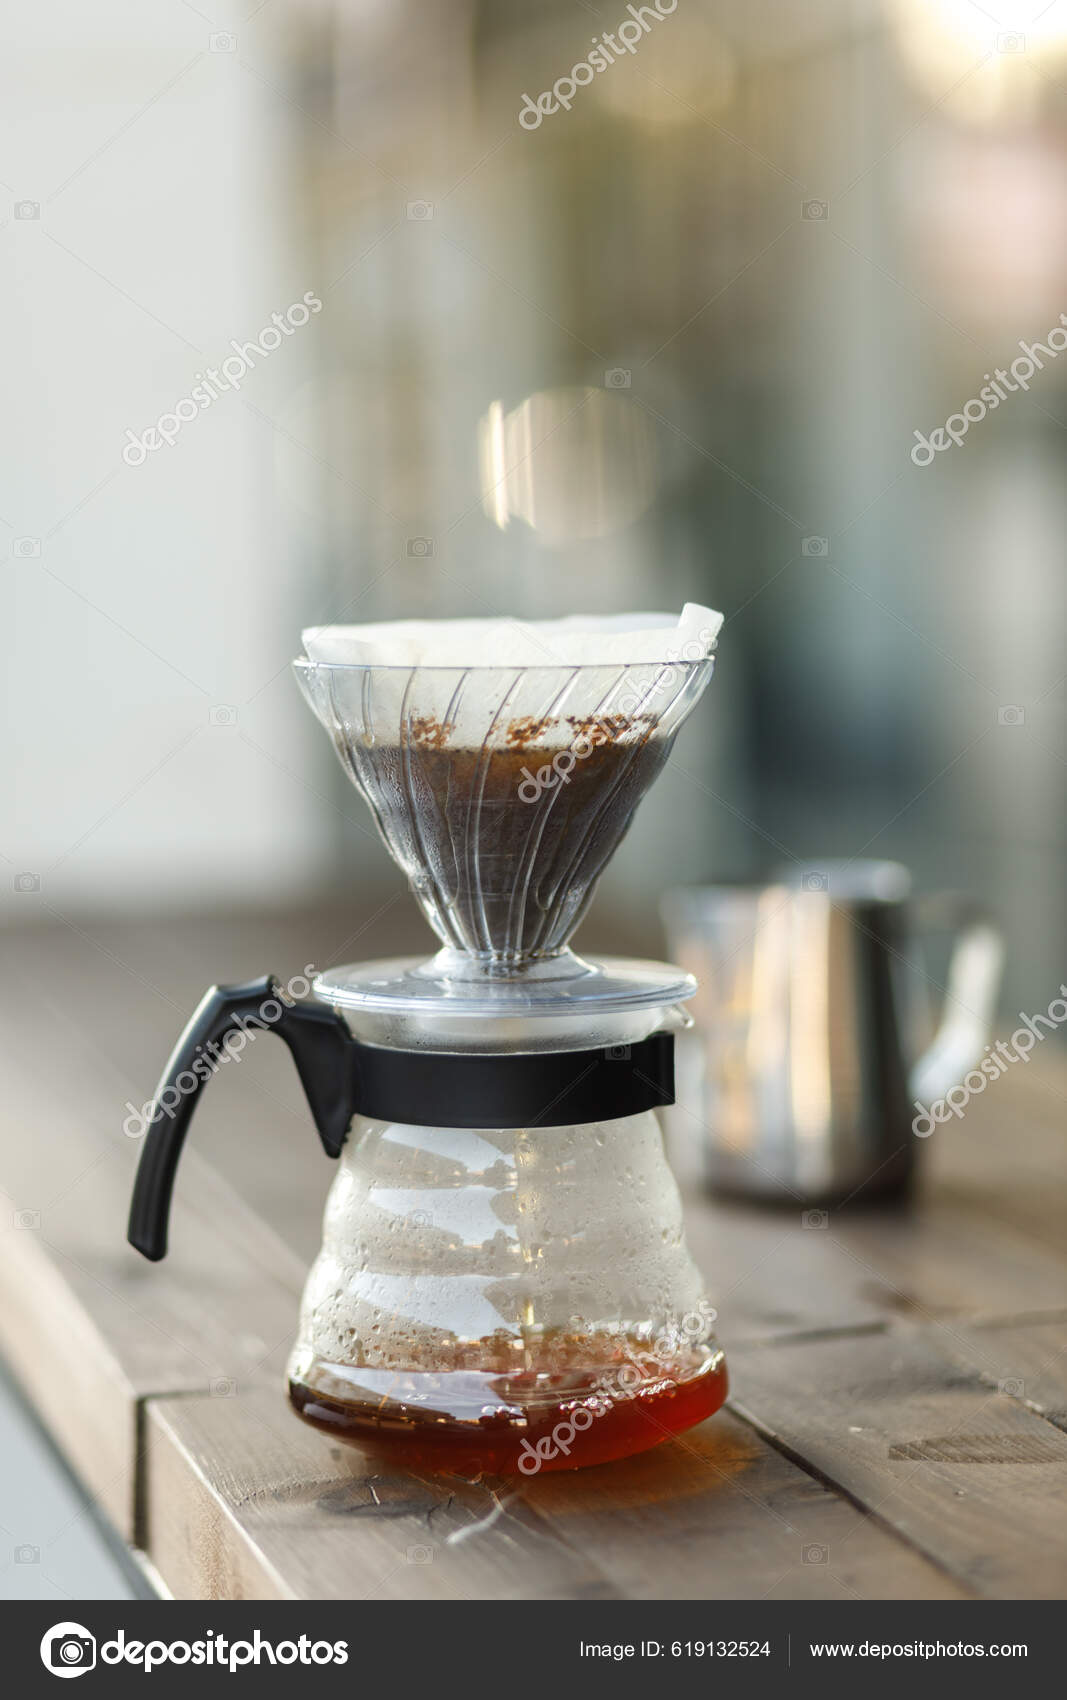 https://st5.depositphotos.com/34275930/61913/i/1600/depositphotos_619132524-stock-photo-brewing-coffee-funnel-pour-coffee.jpg